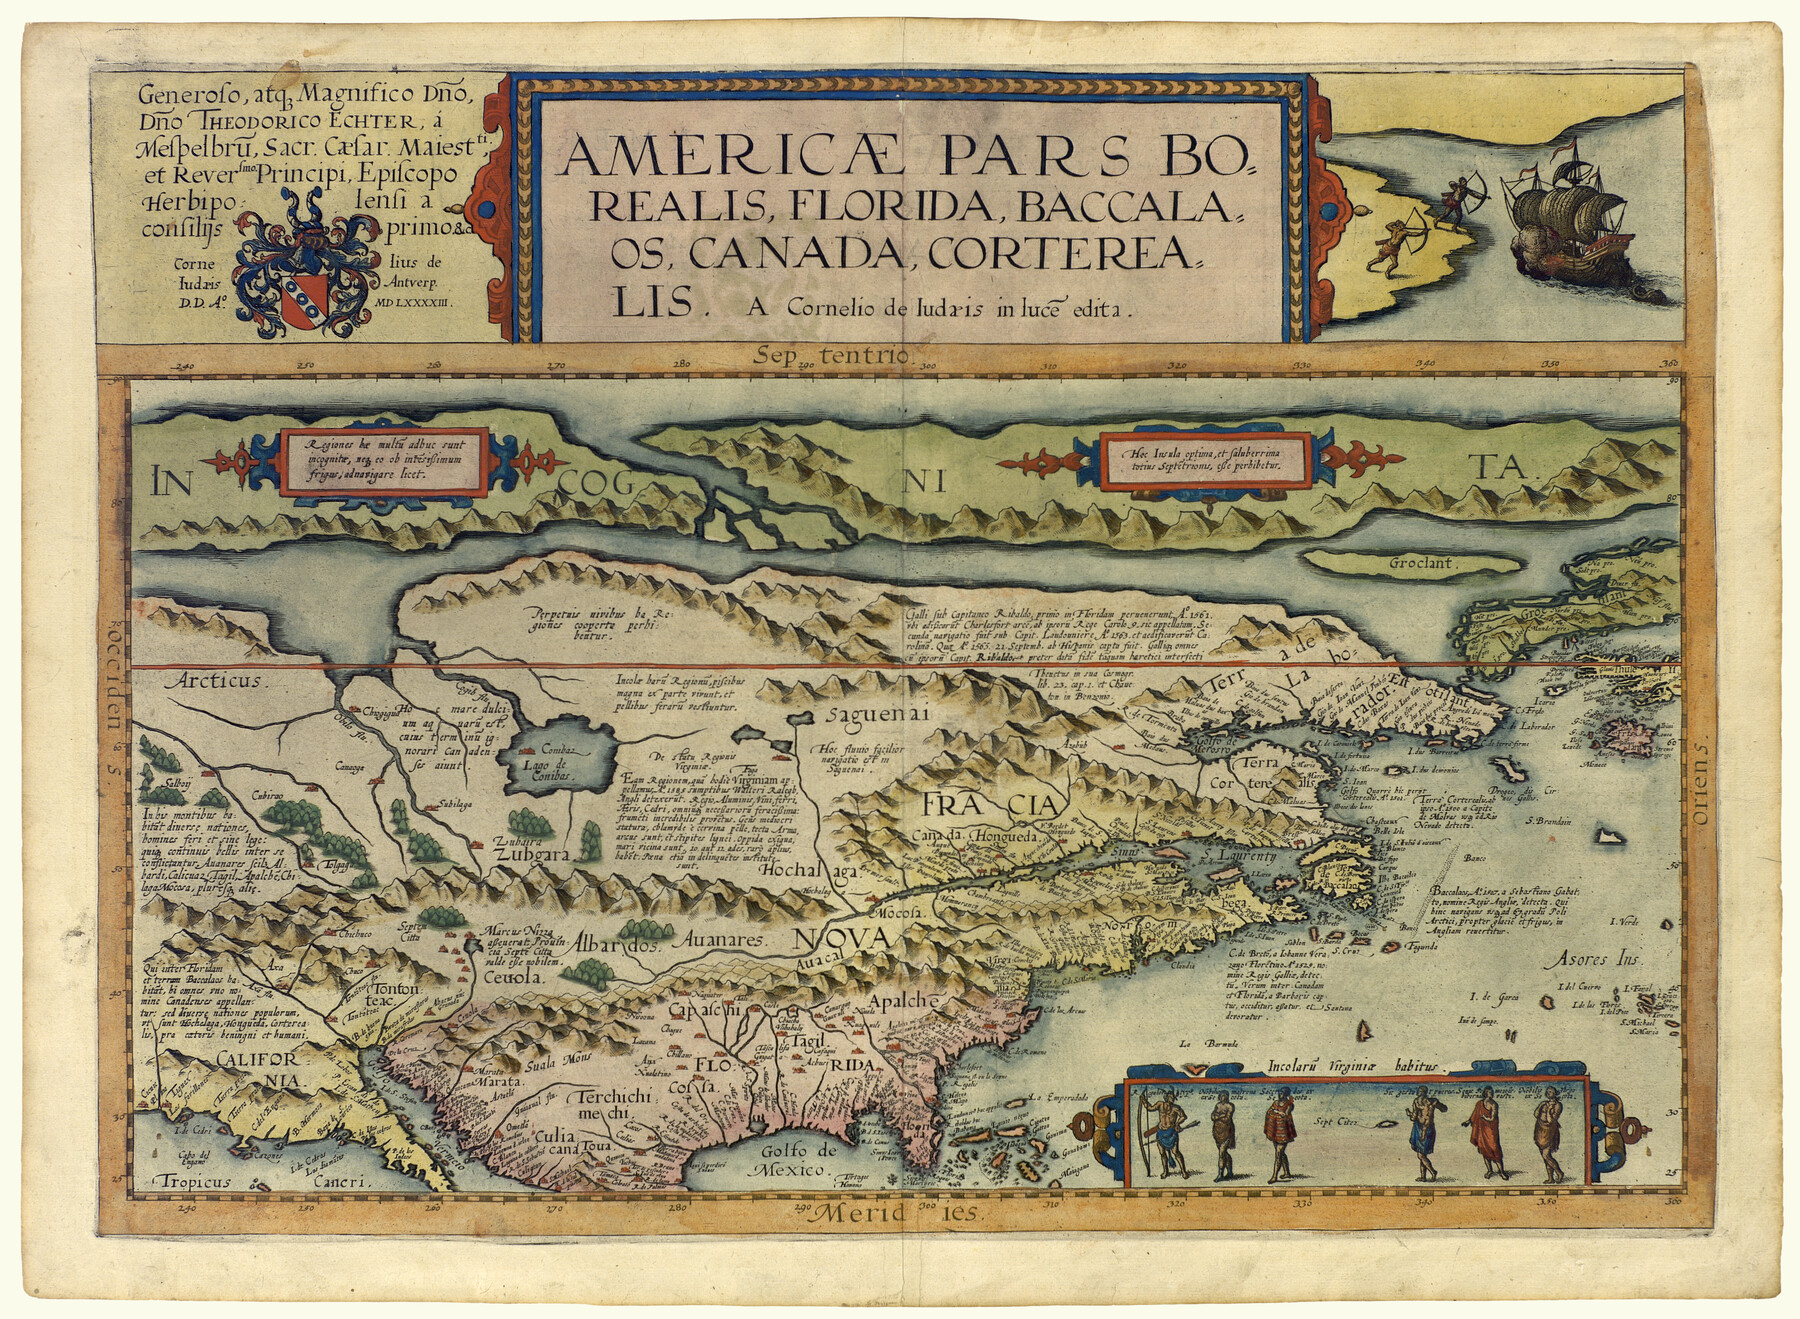 93832, Americae Pars Borealis, Florida, Baccalaos, Canada, Corterealis, Holcomb Digital Map Collection